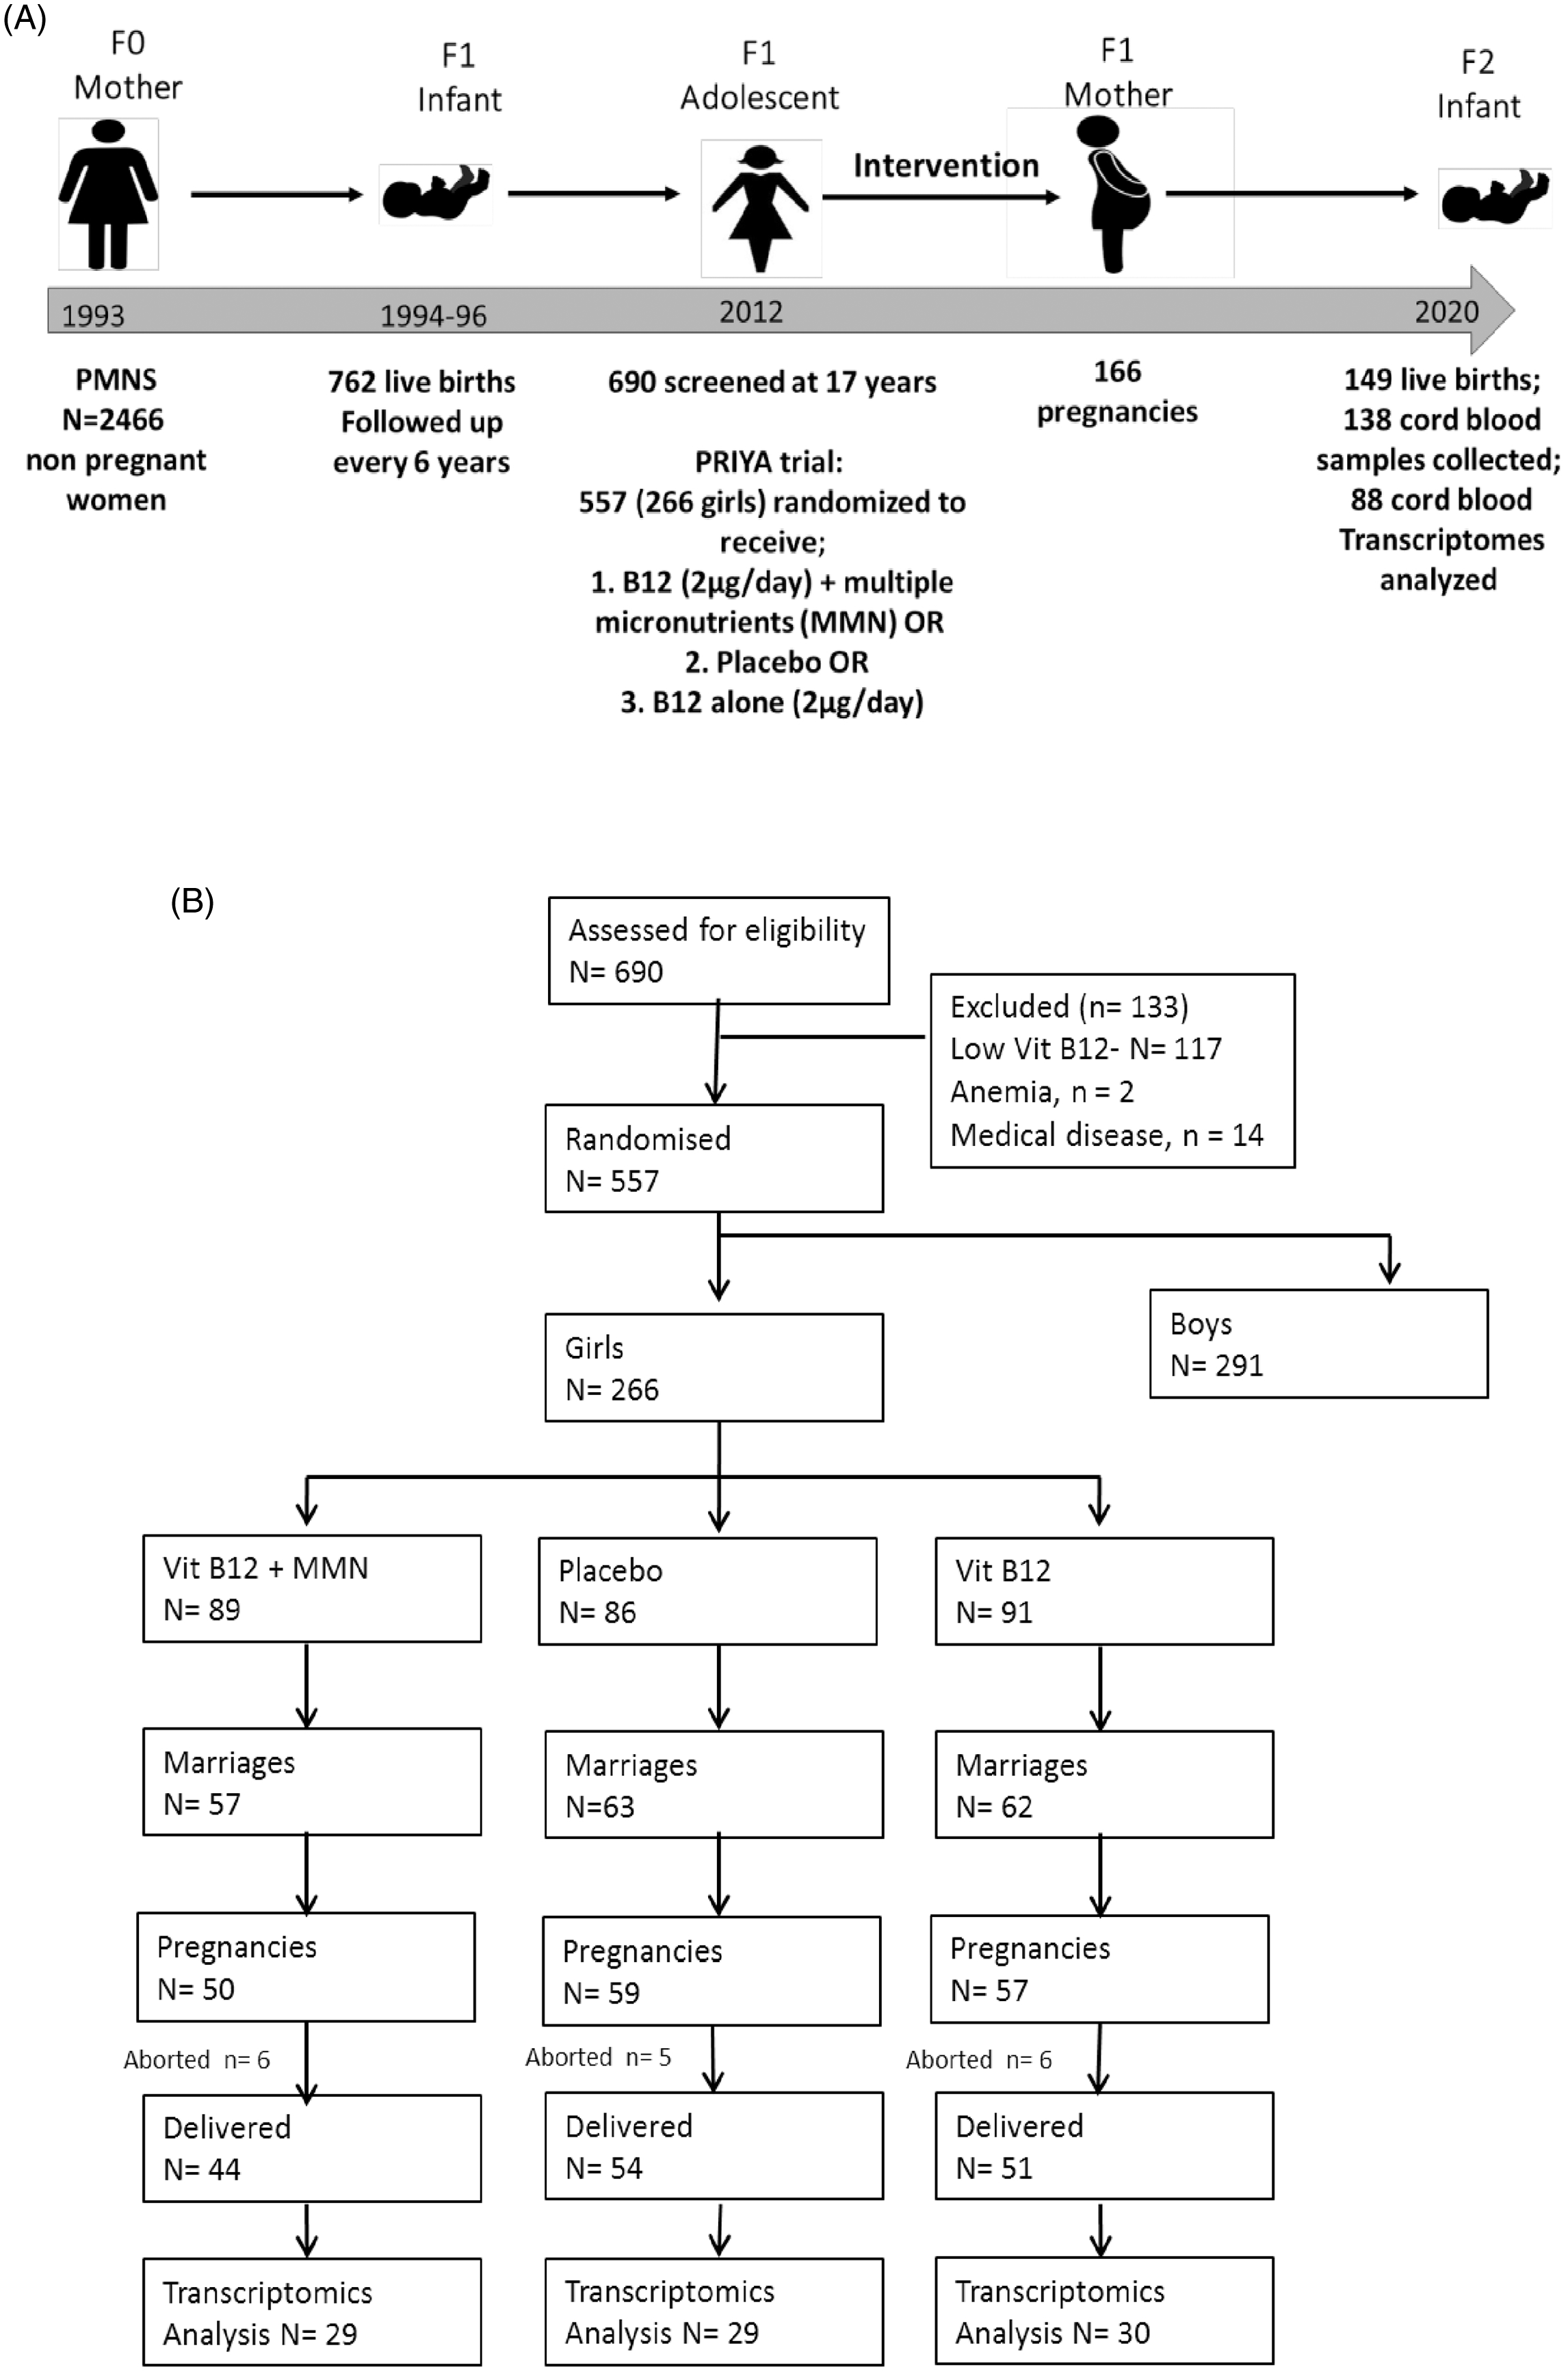 Clinical study design and organization. (A) Consort diagram. (B) Study